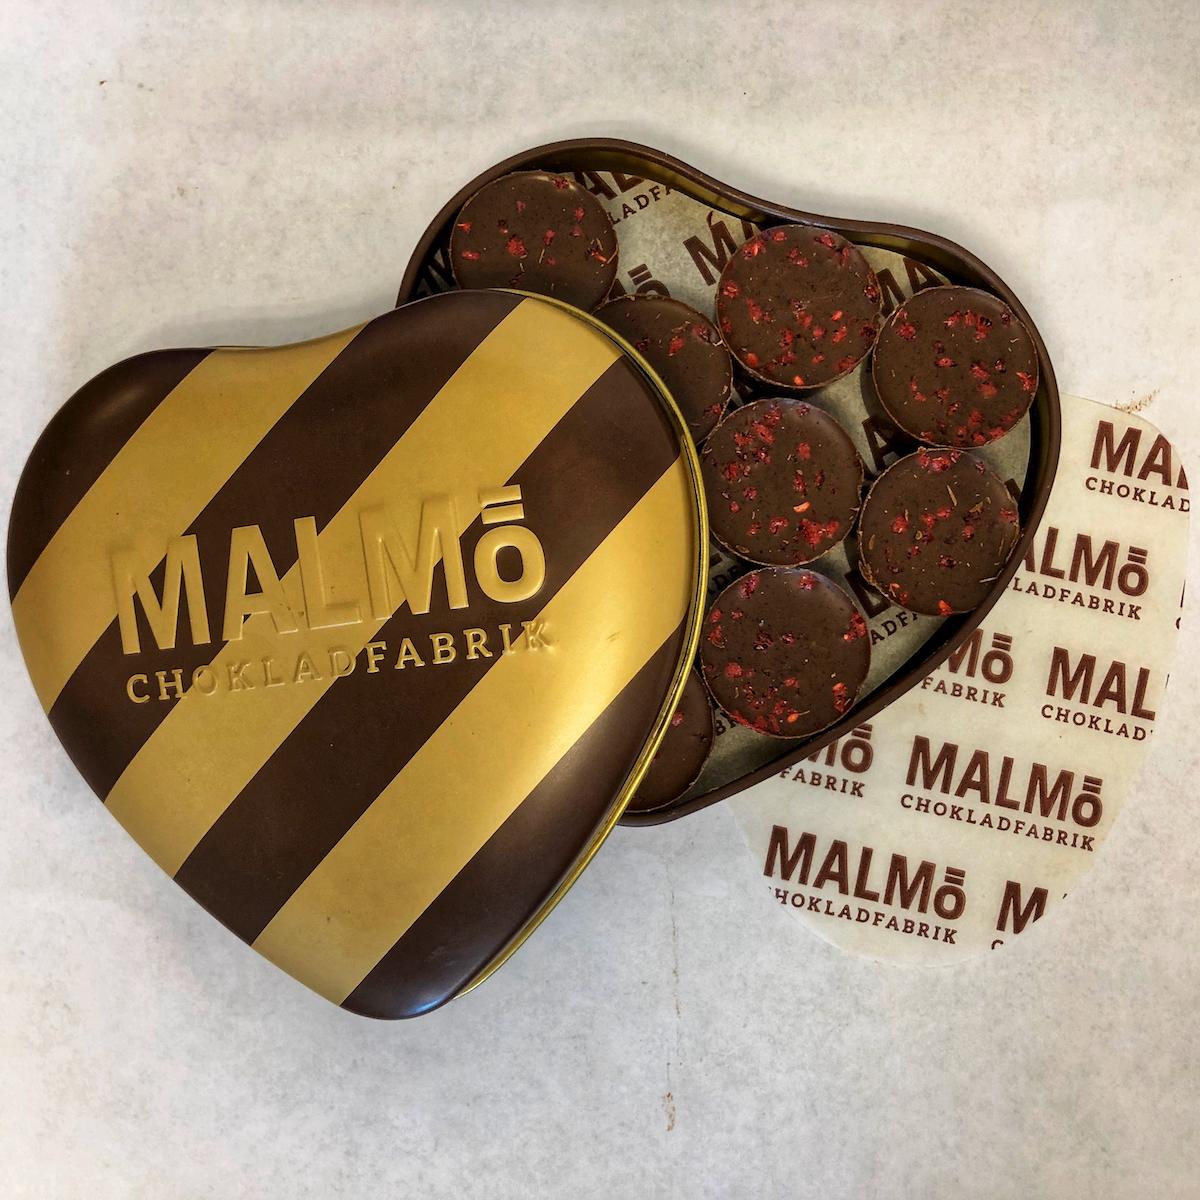 Malmö Chokladfabrik's Liebe'